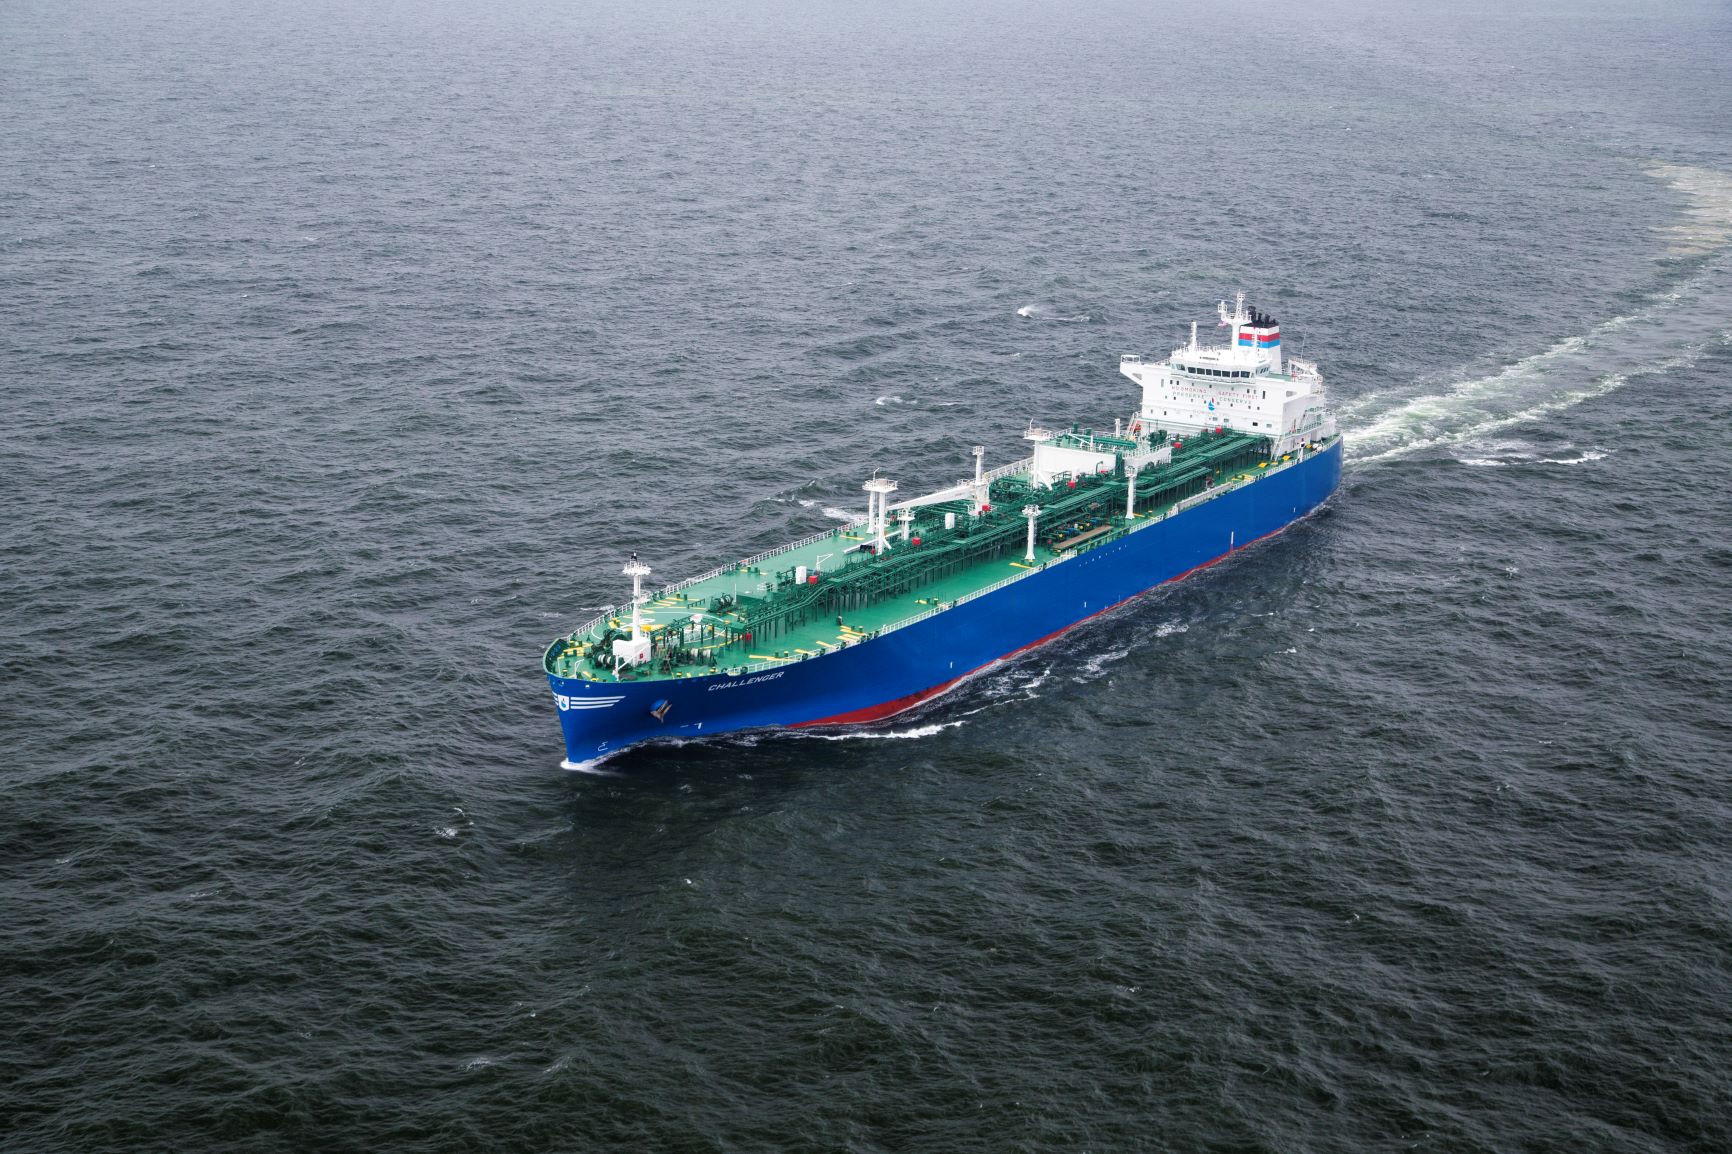 Dorian LPG install Kongsberg's Vessel Insight to its fleet of LPG carriers